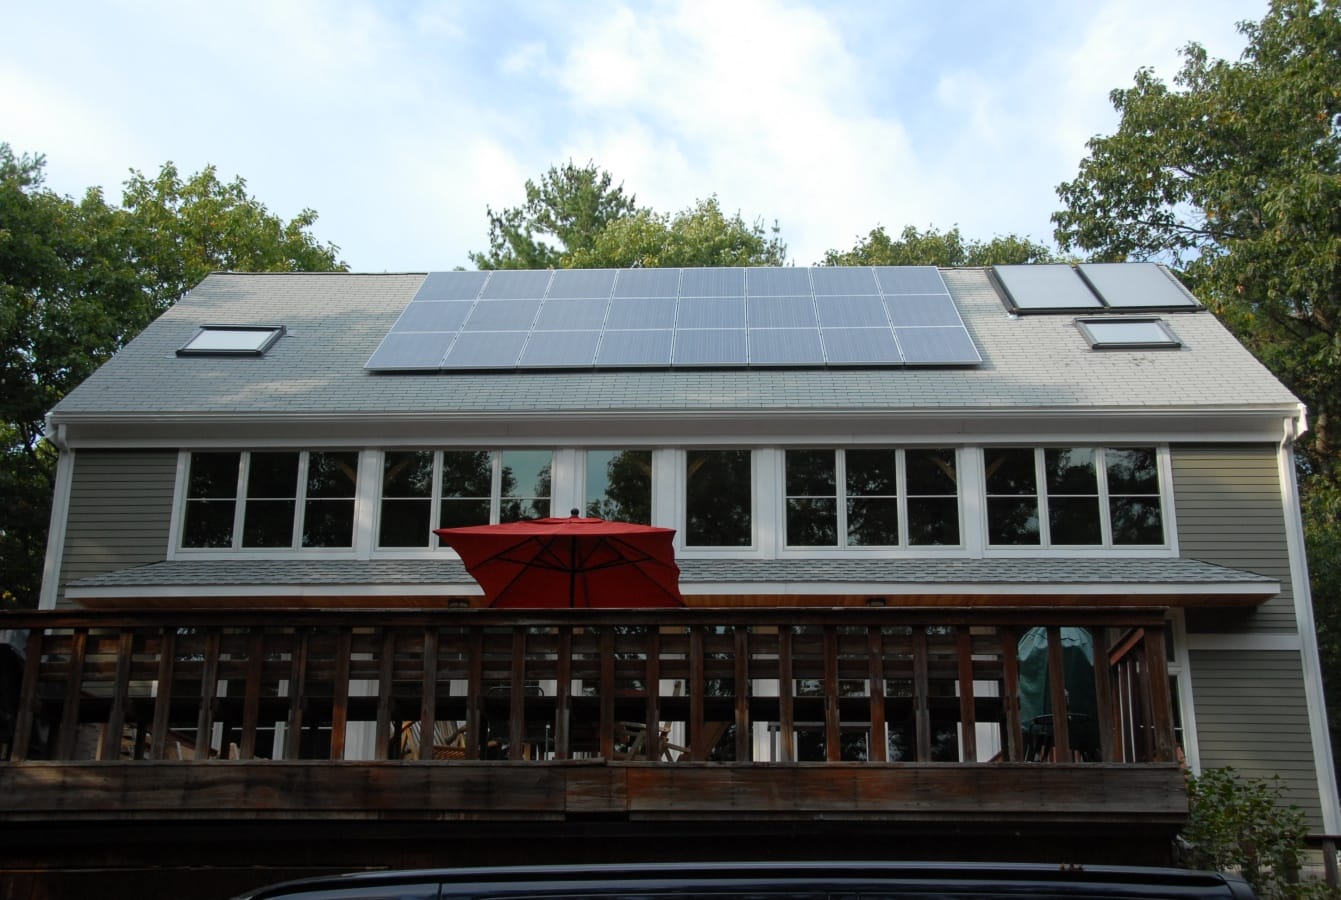 Tower Road Solar Installation Photo